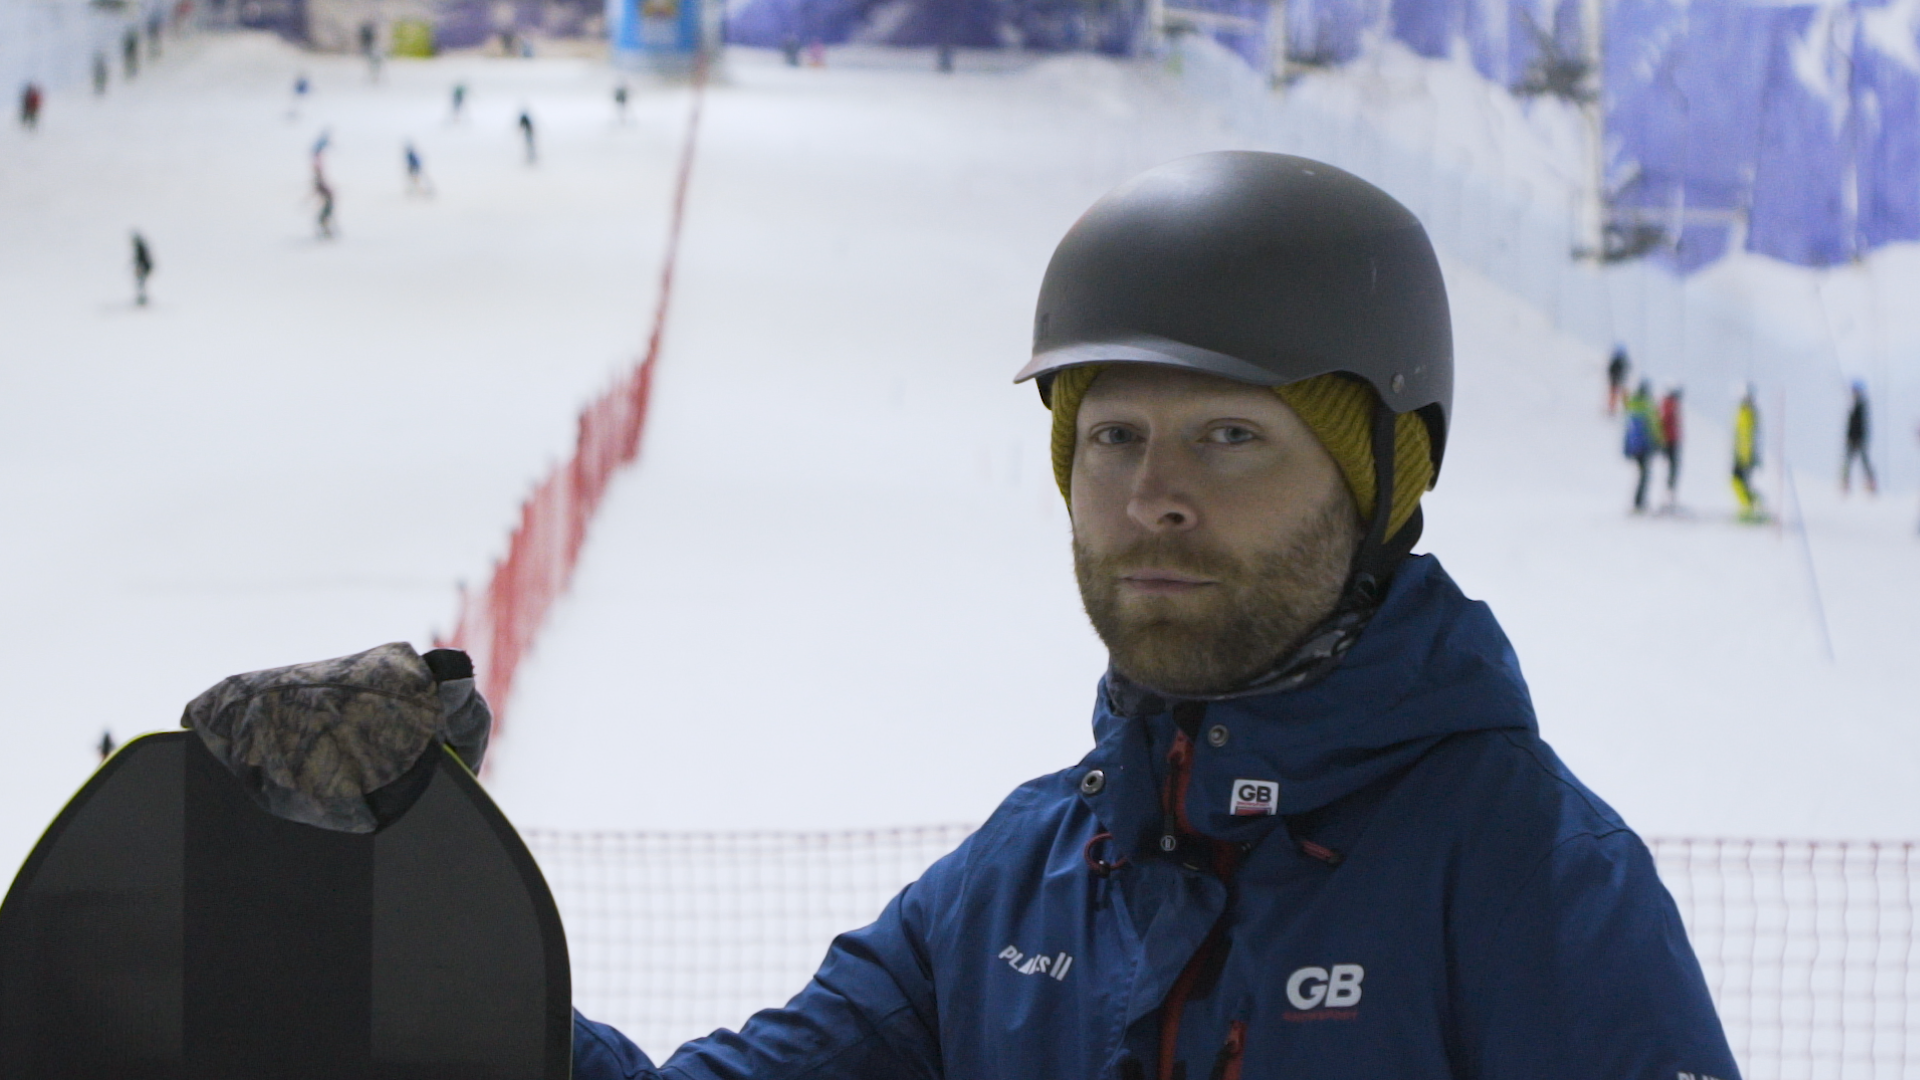 Jon-Allan Butterworth to compete for GB Para-Snowboard team